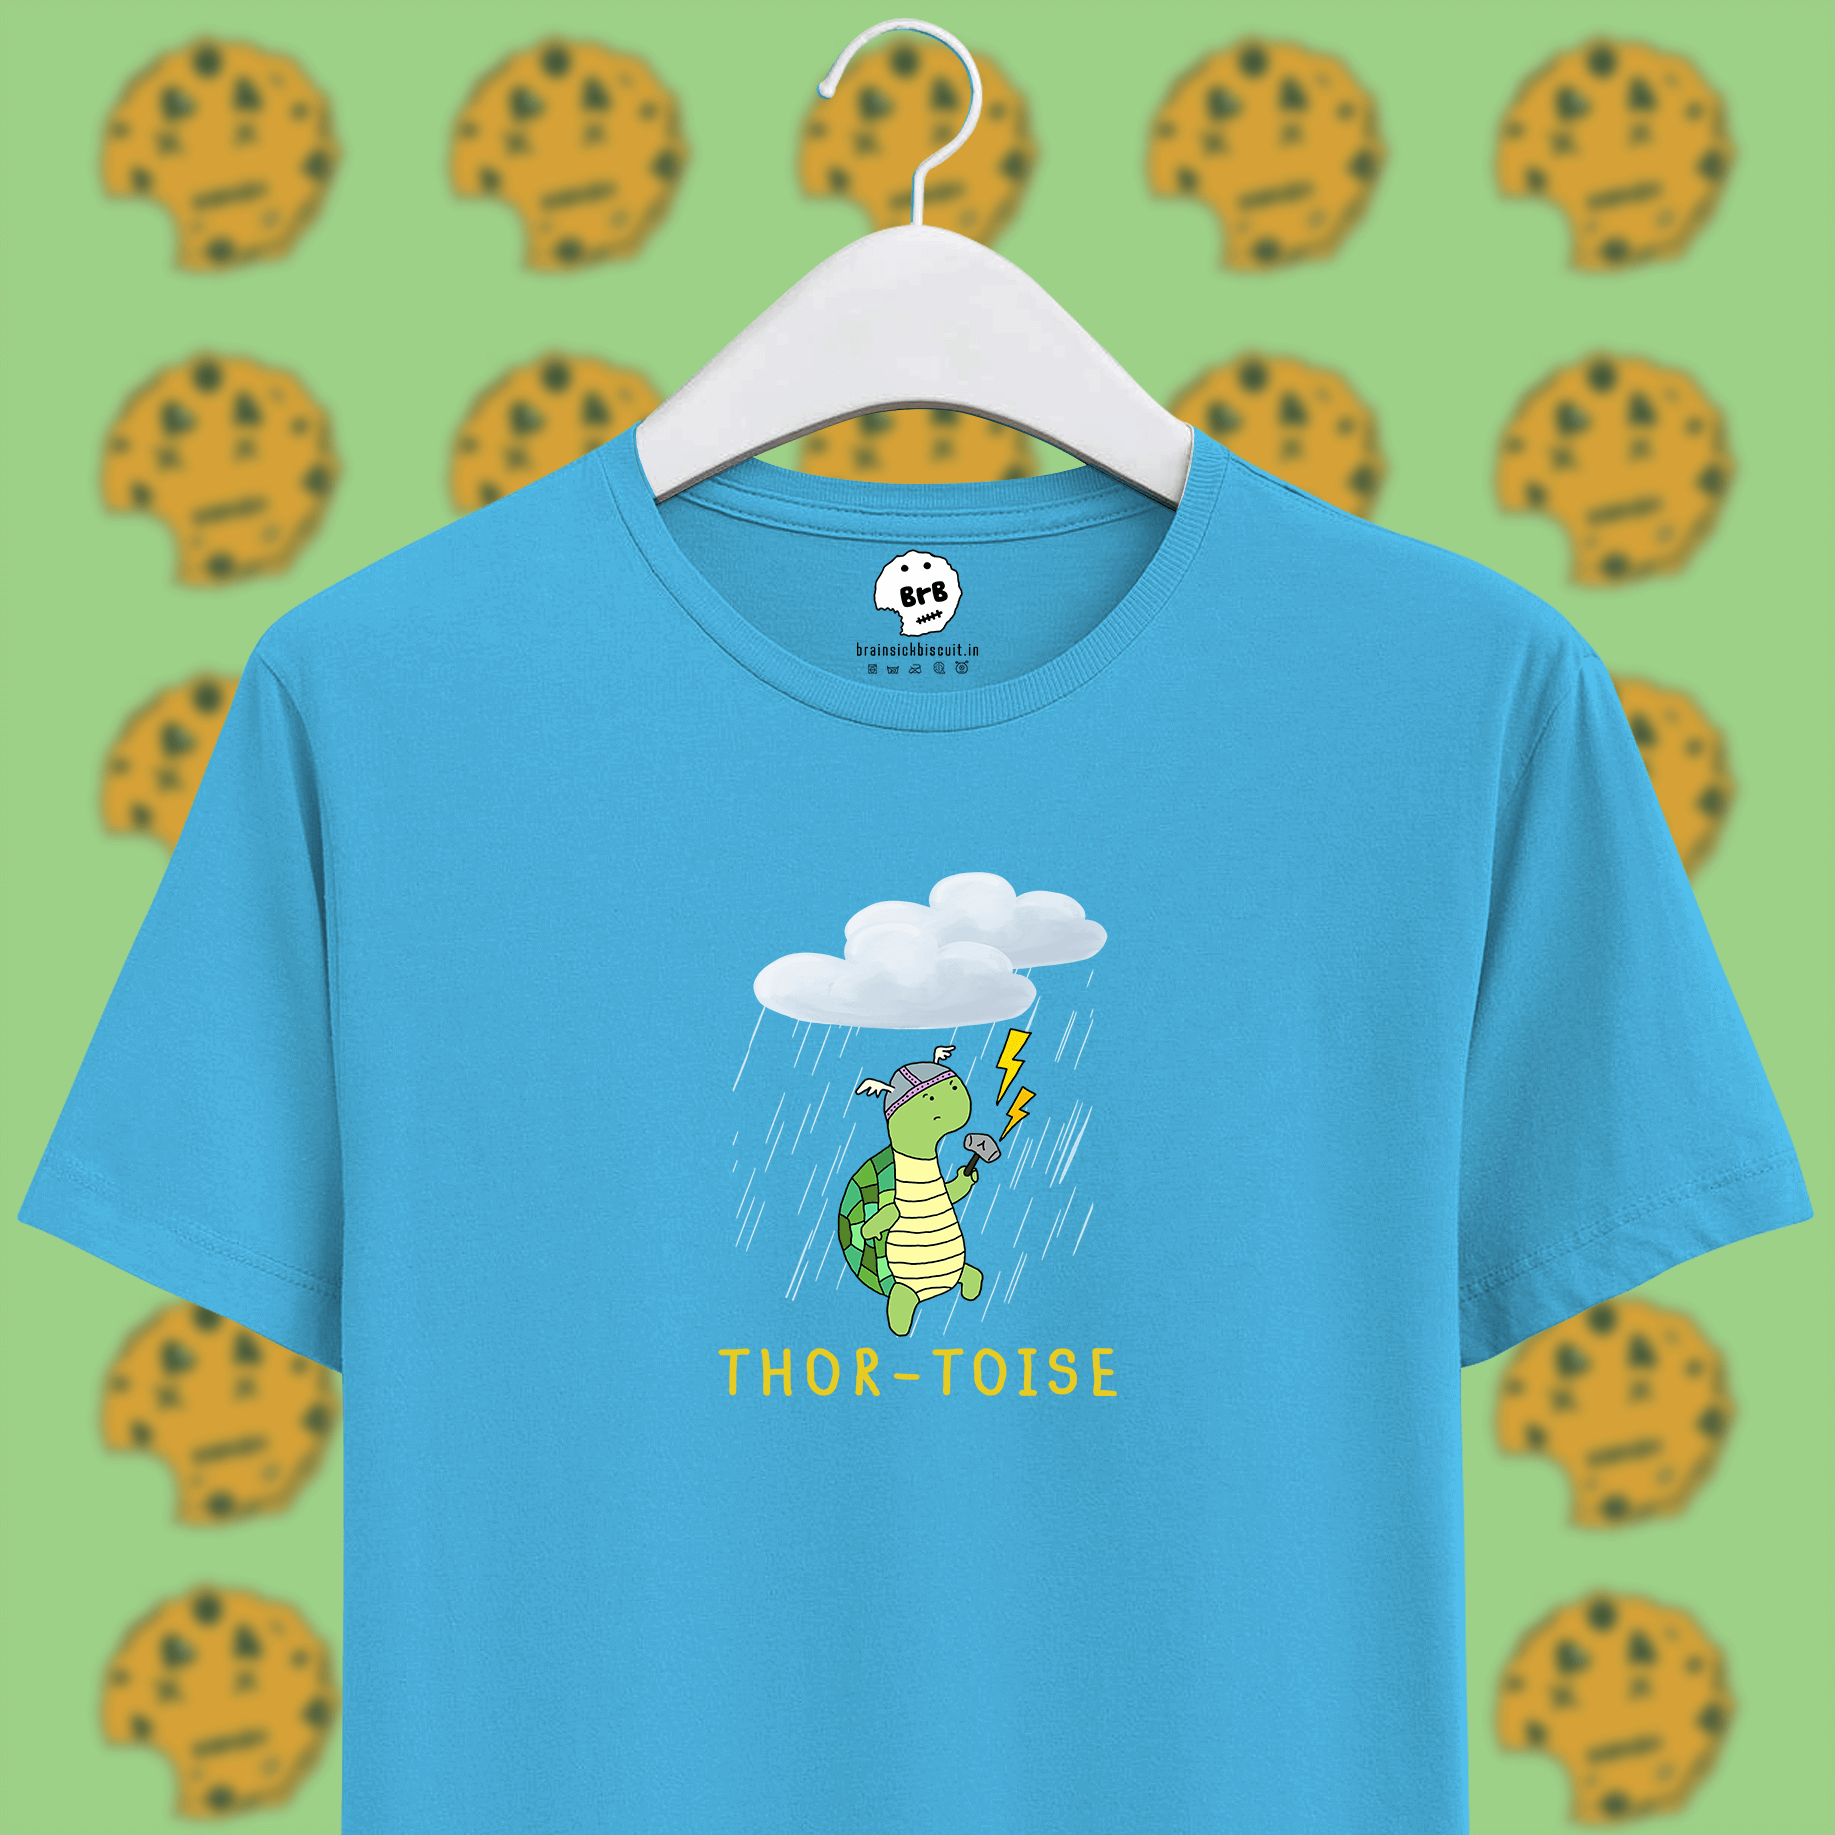 thortoise marvel joke pun on sky blue colour unisex t-shirt with rain and lightning and clouds with animated tortoise holding thor's hammer.